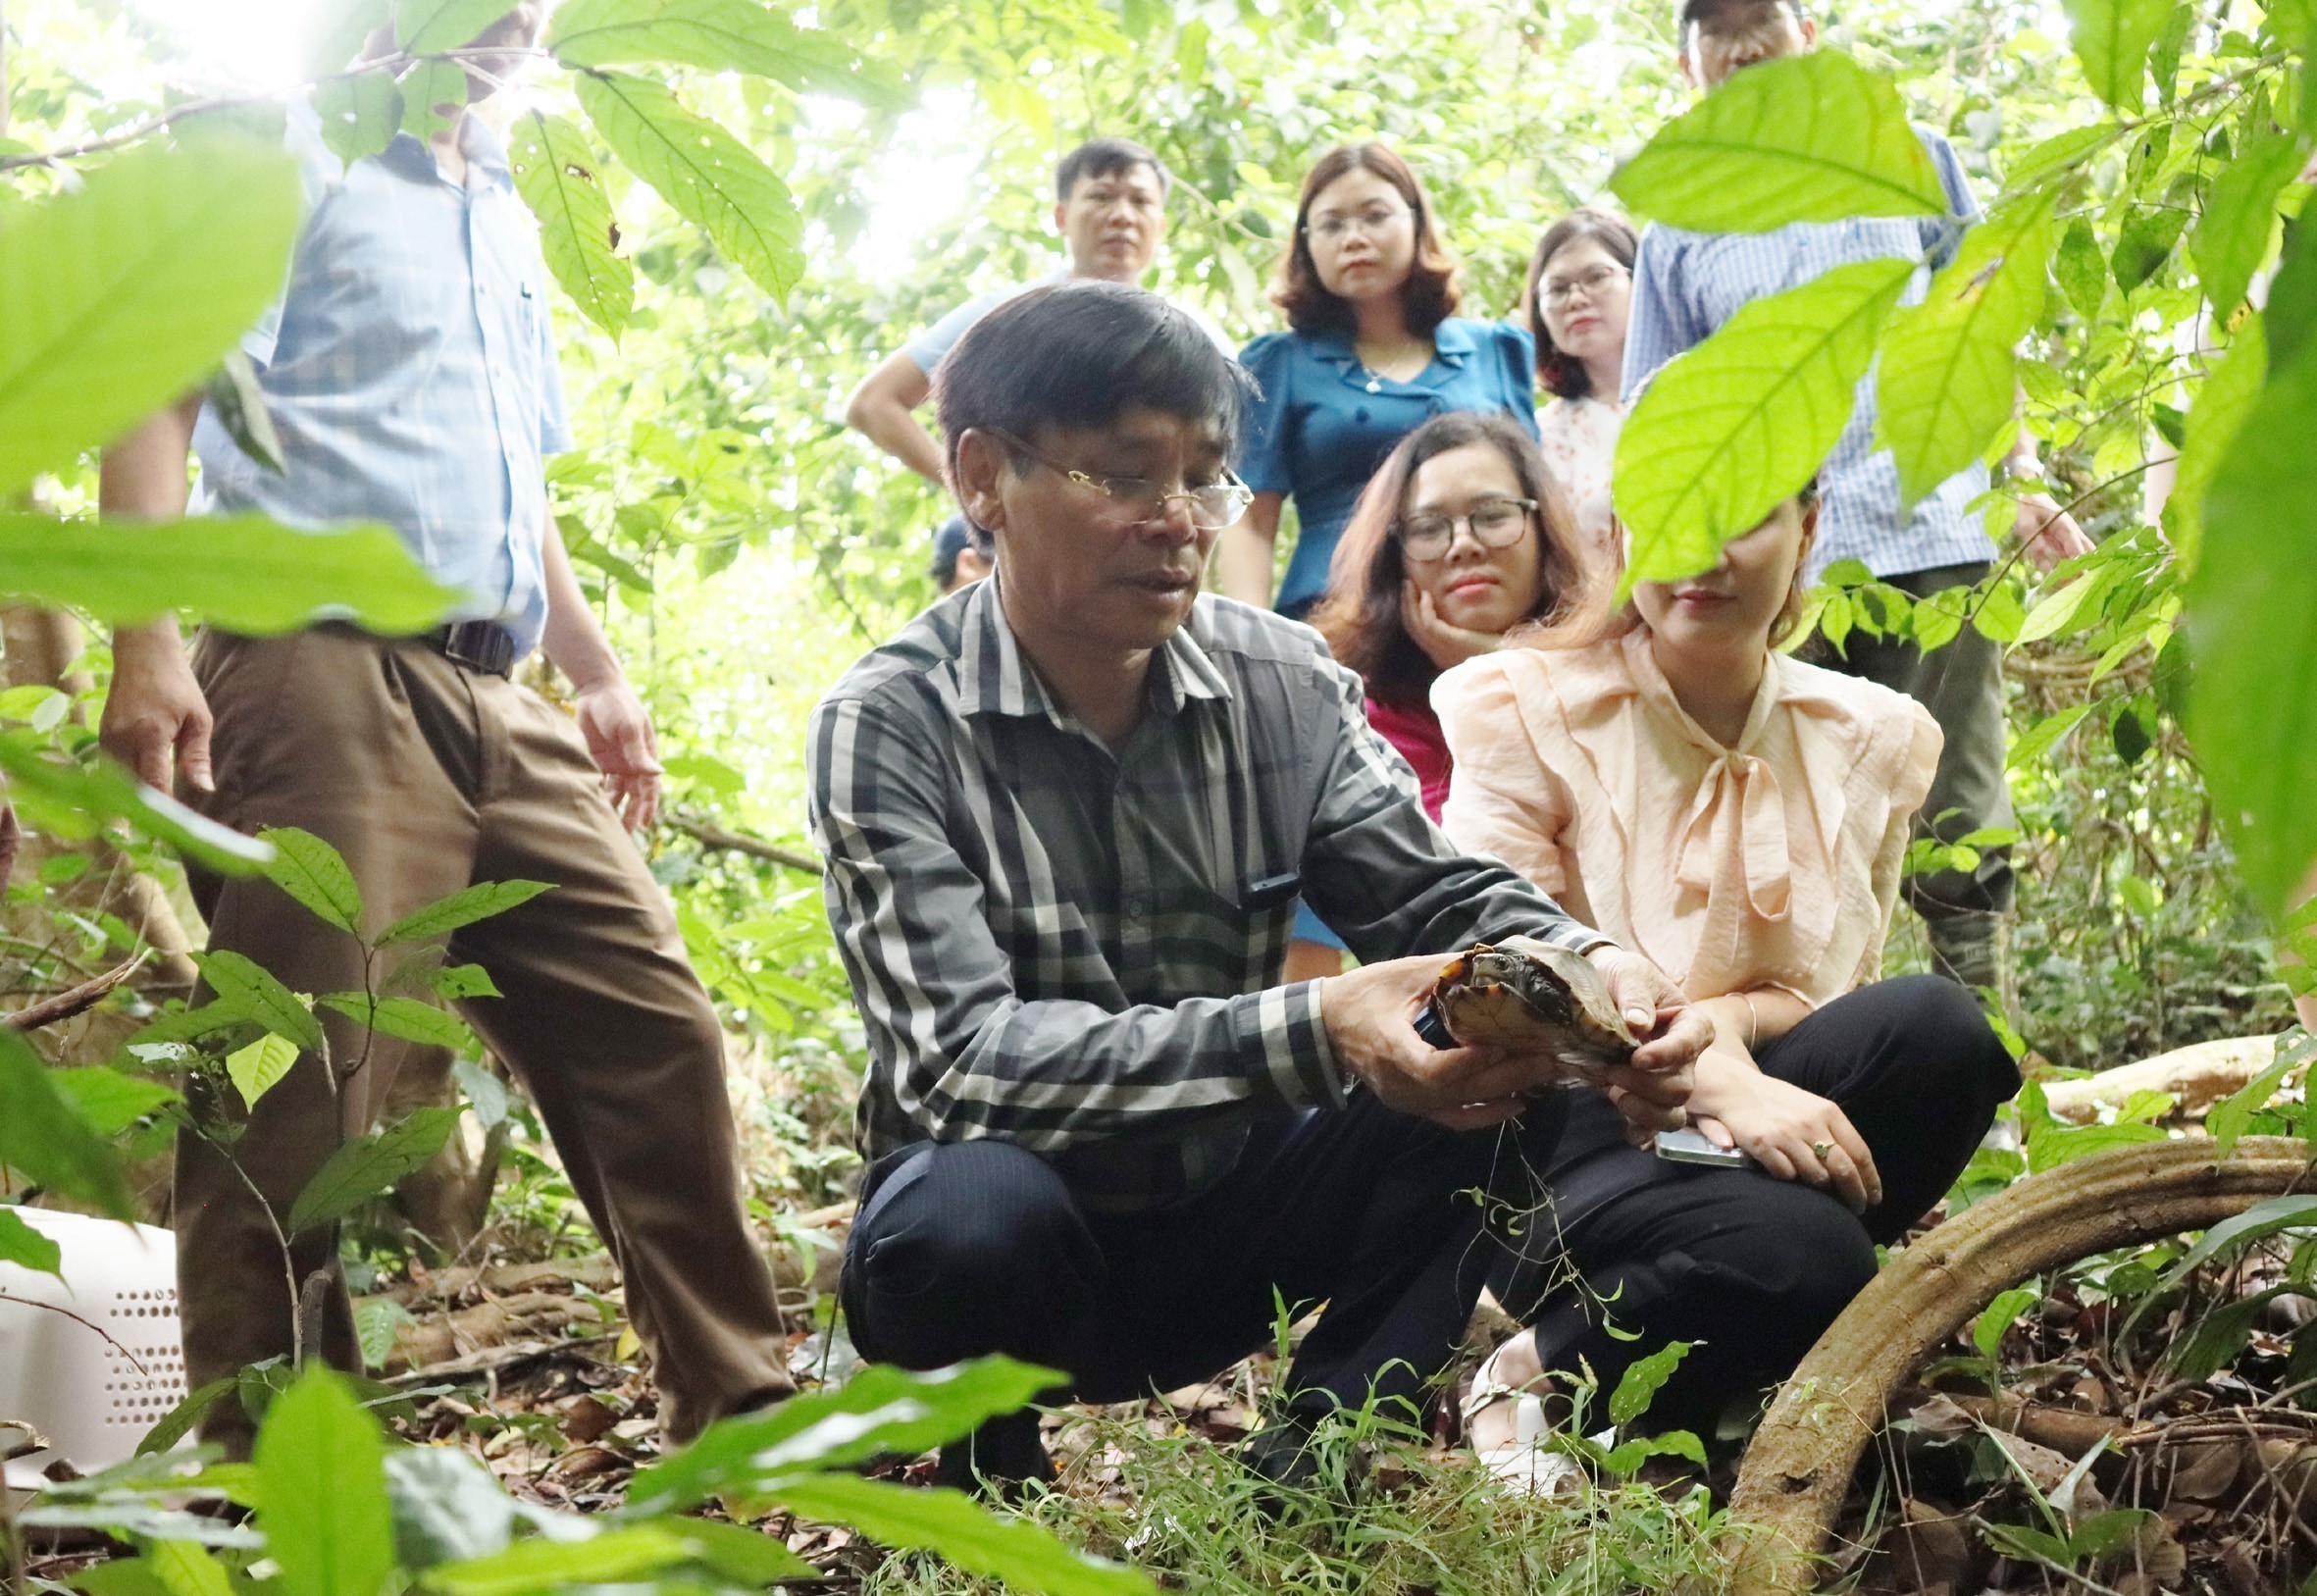 Tens of wild animals released back to nature | Environment | Vietnam+  (VietnamPlus)